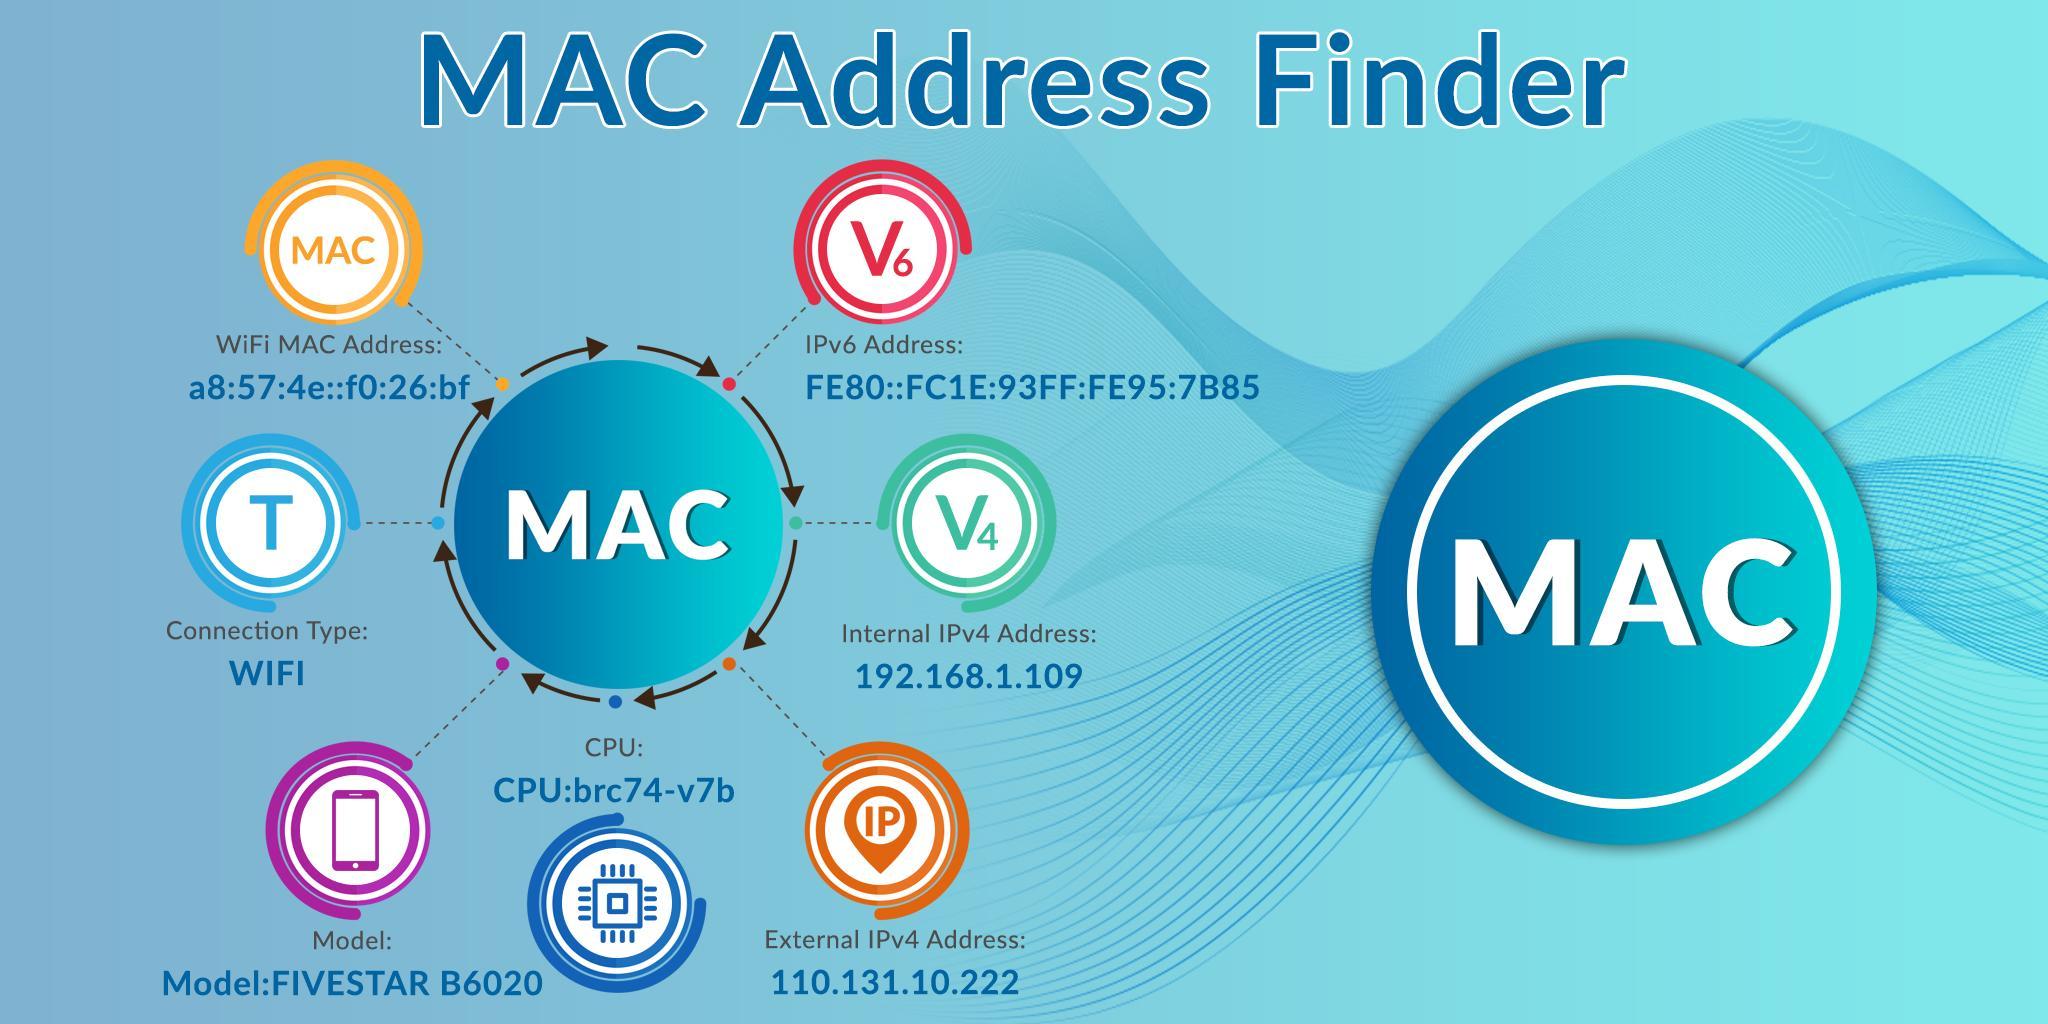 windows app scan network for mac address